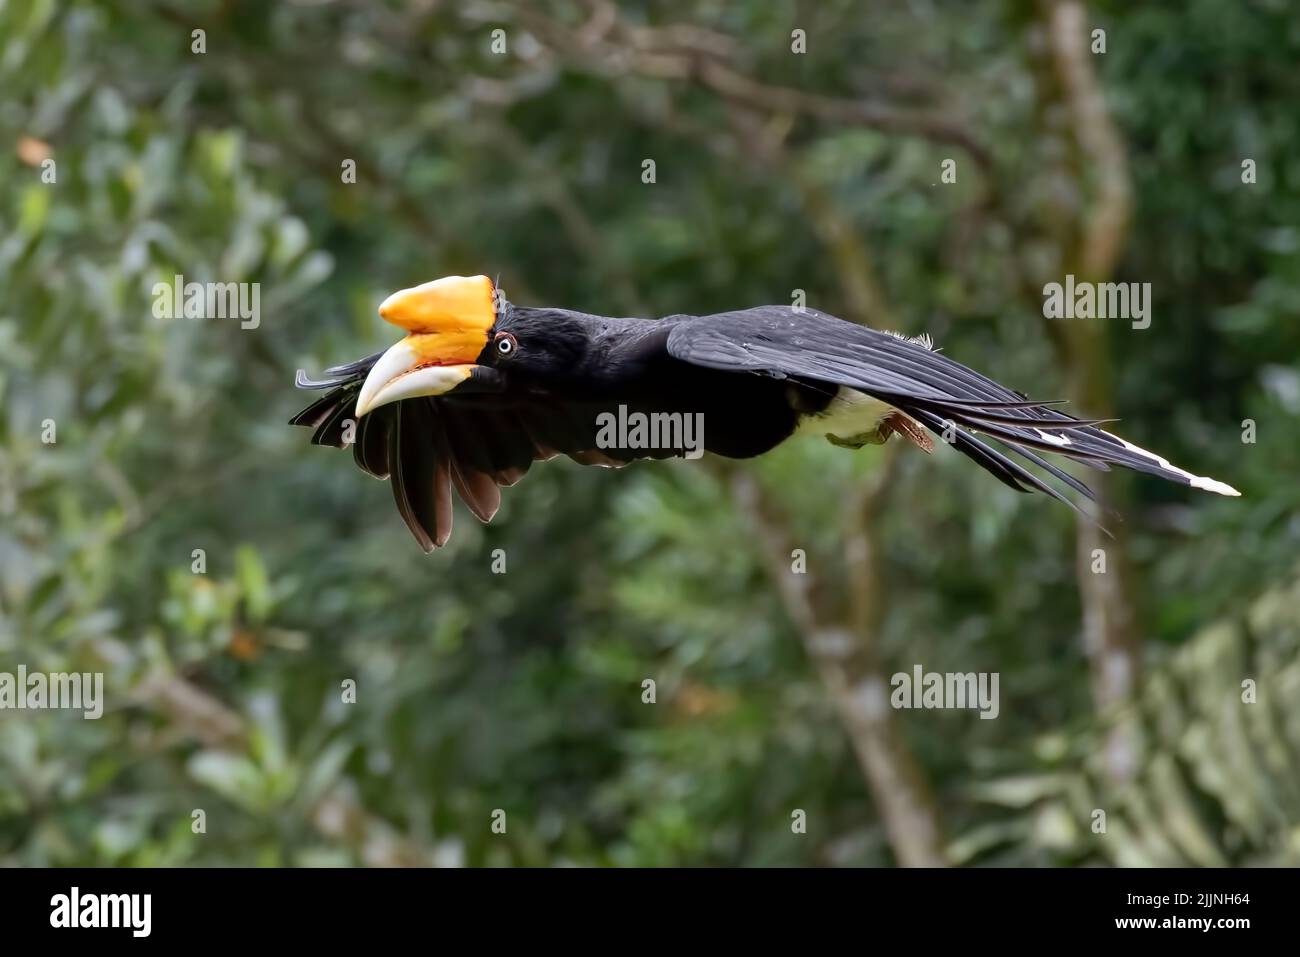 Close-Up of a hornbill bird in flight in jungle, Indonesia Stock Photo